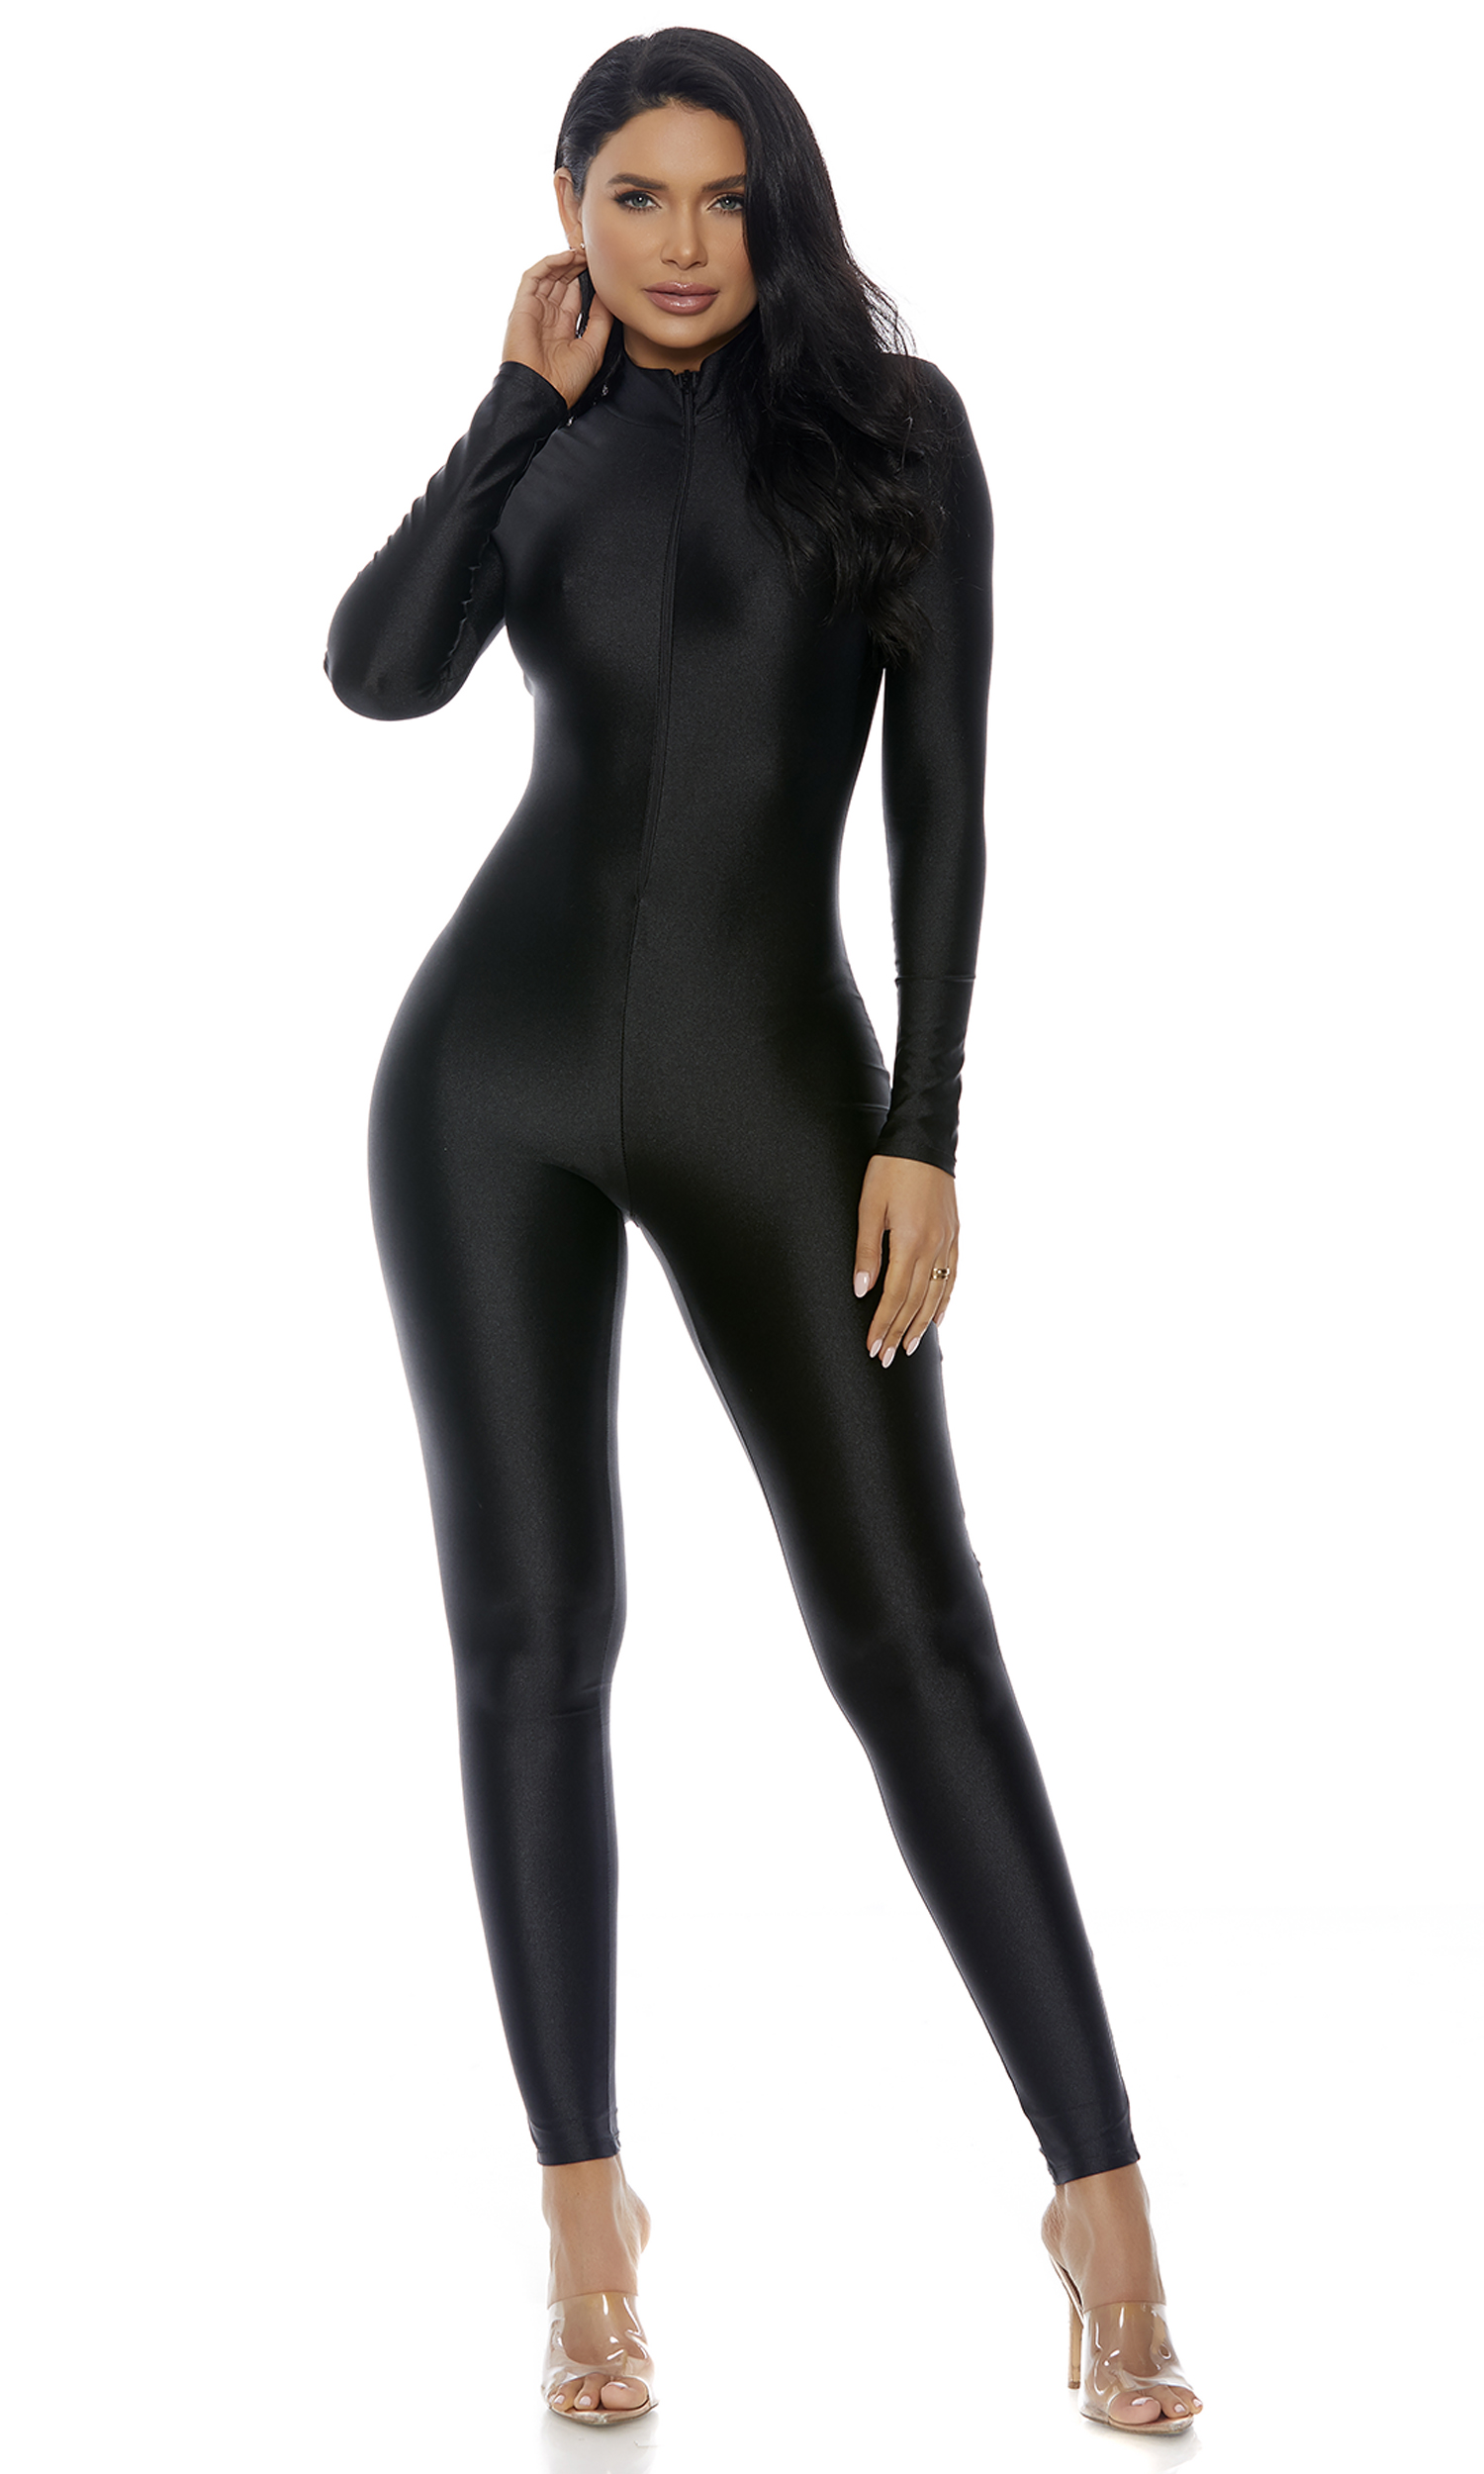 Black full bodysuit  Body suit outfits, Full body suit, Black